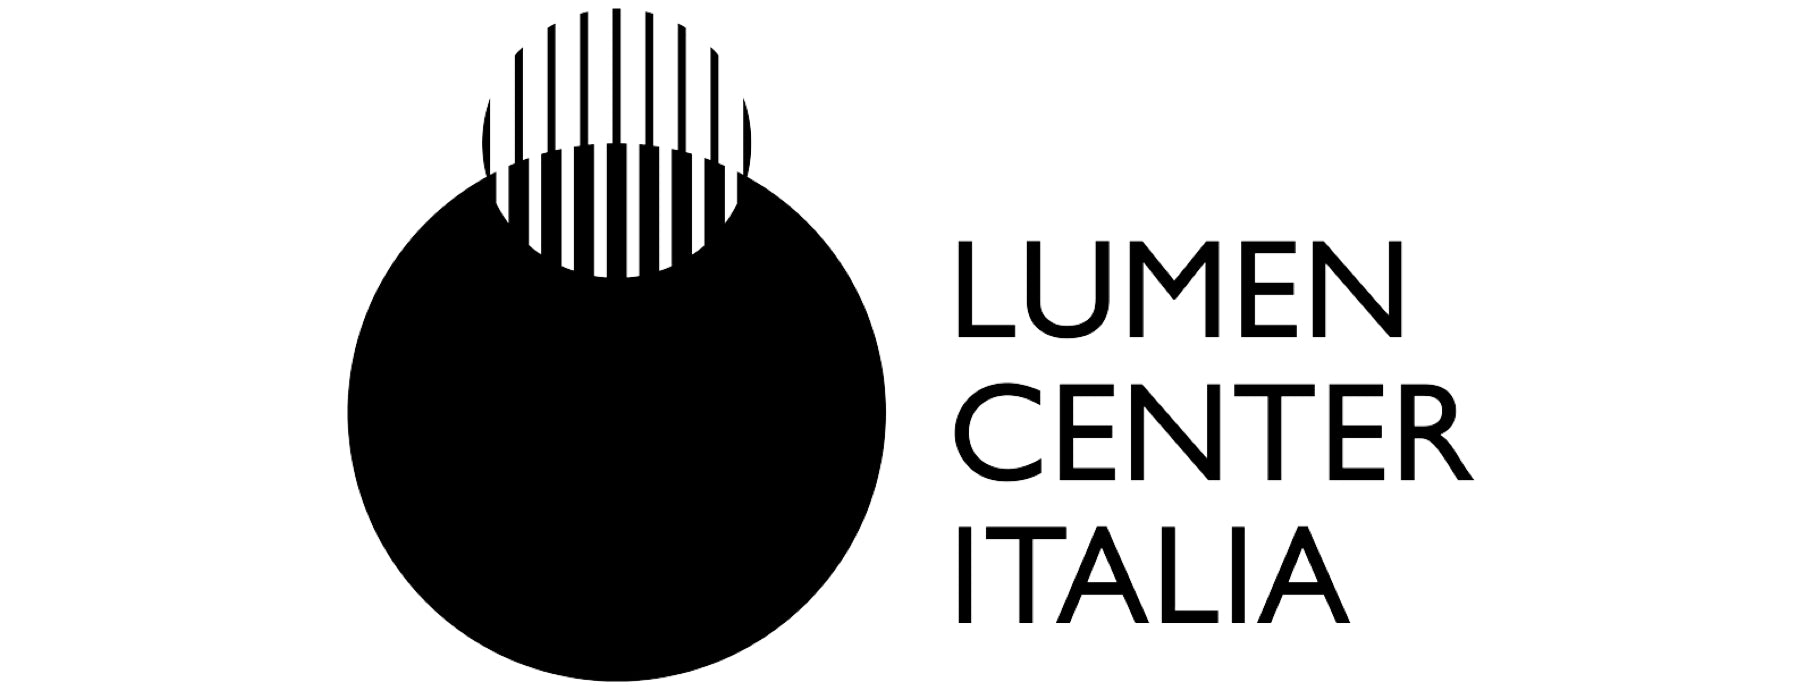 Lumen Center Italia Lighting Collection, Lighting Products by Lumen Center  Italia